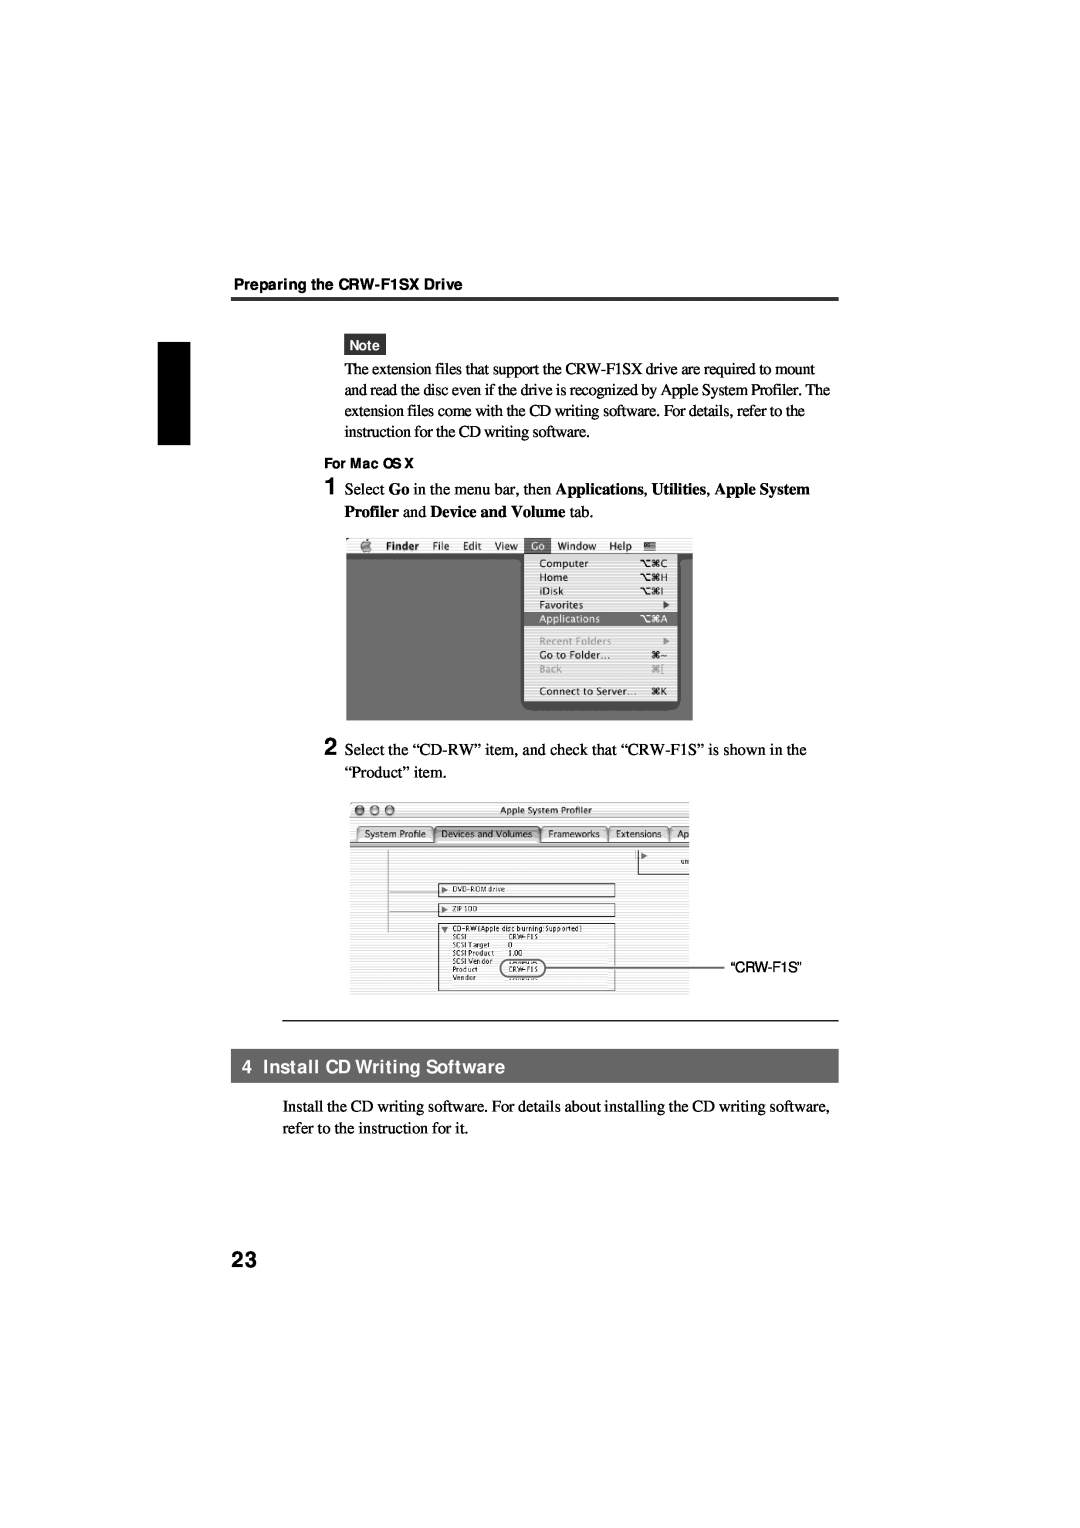 Yamaha manual Install CD Writing Software, Preparing the CRW-F1SX Drive, For Mac OS 